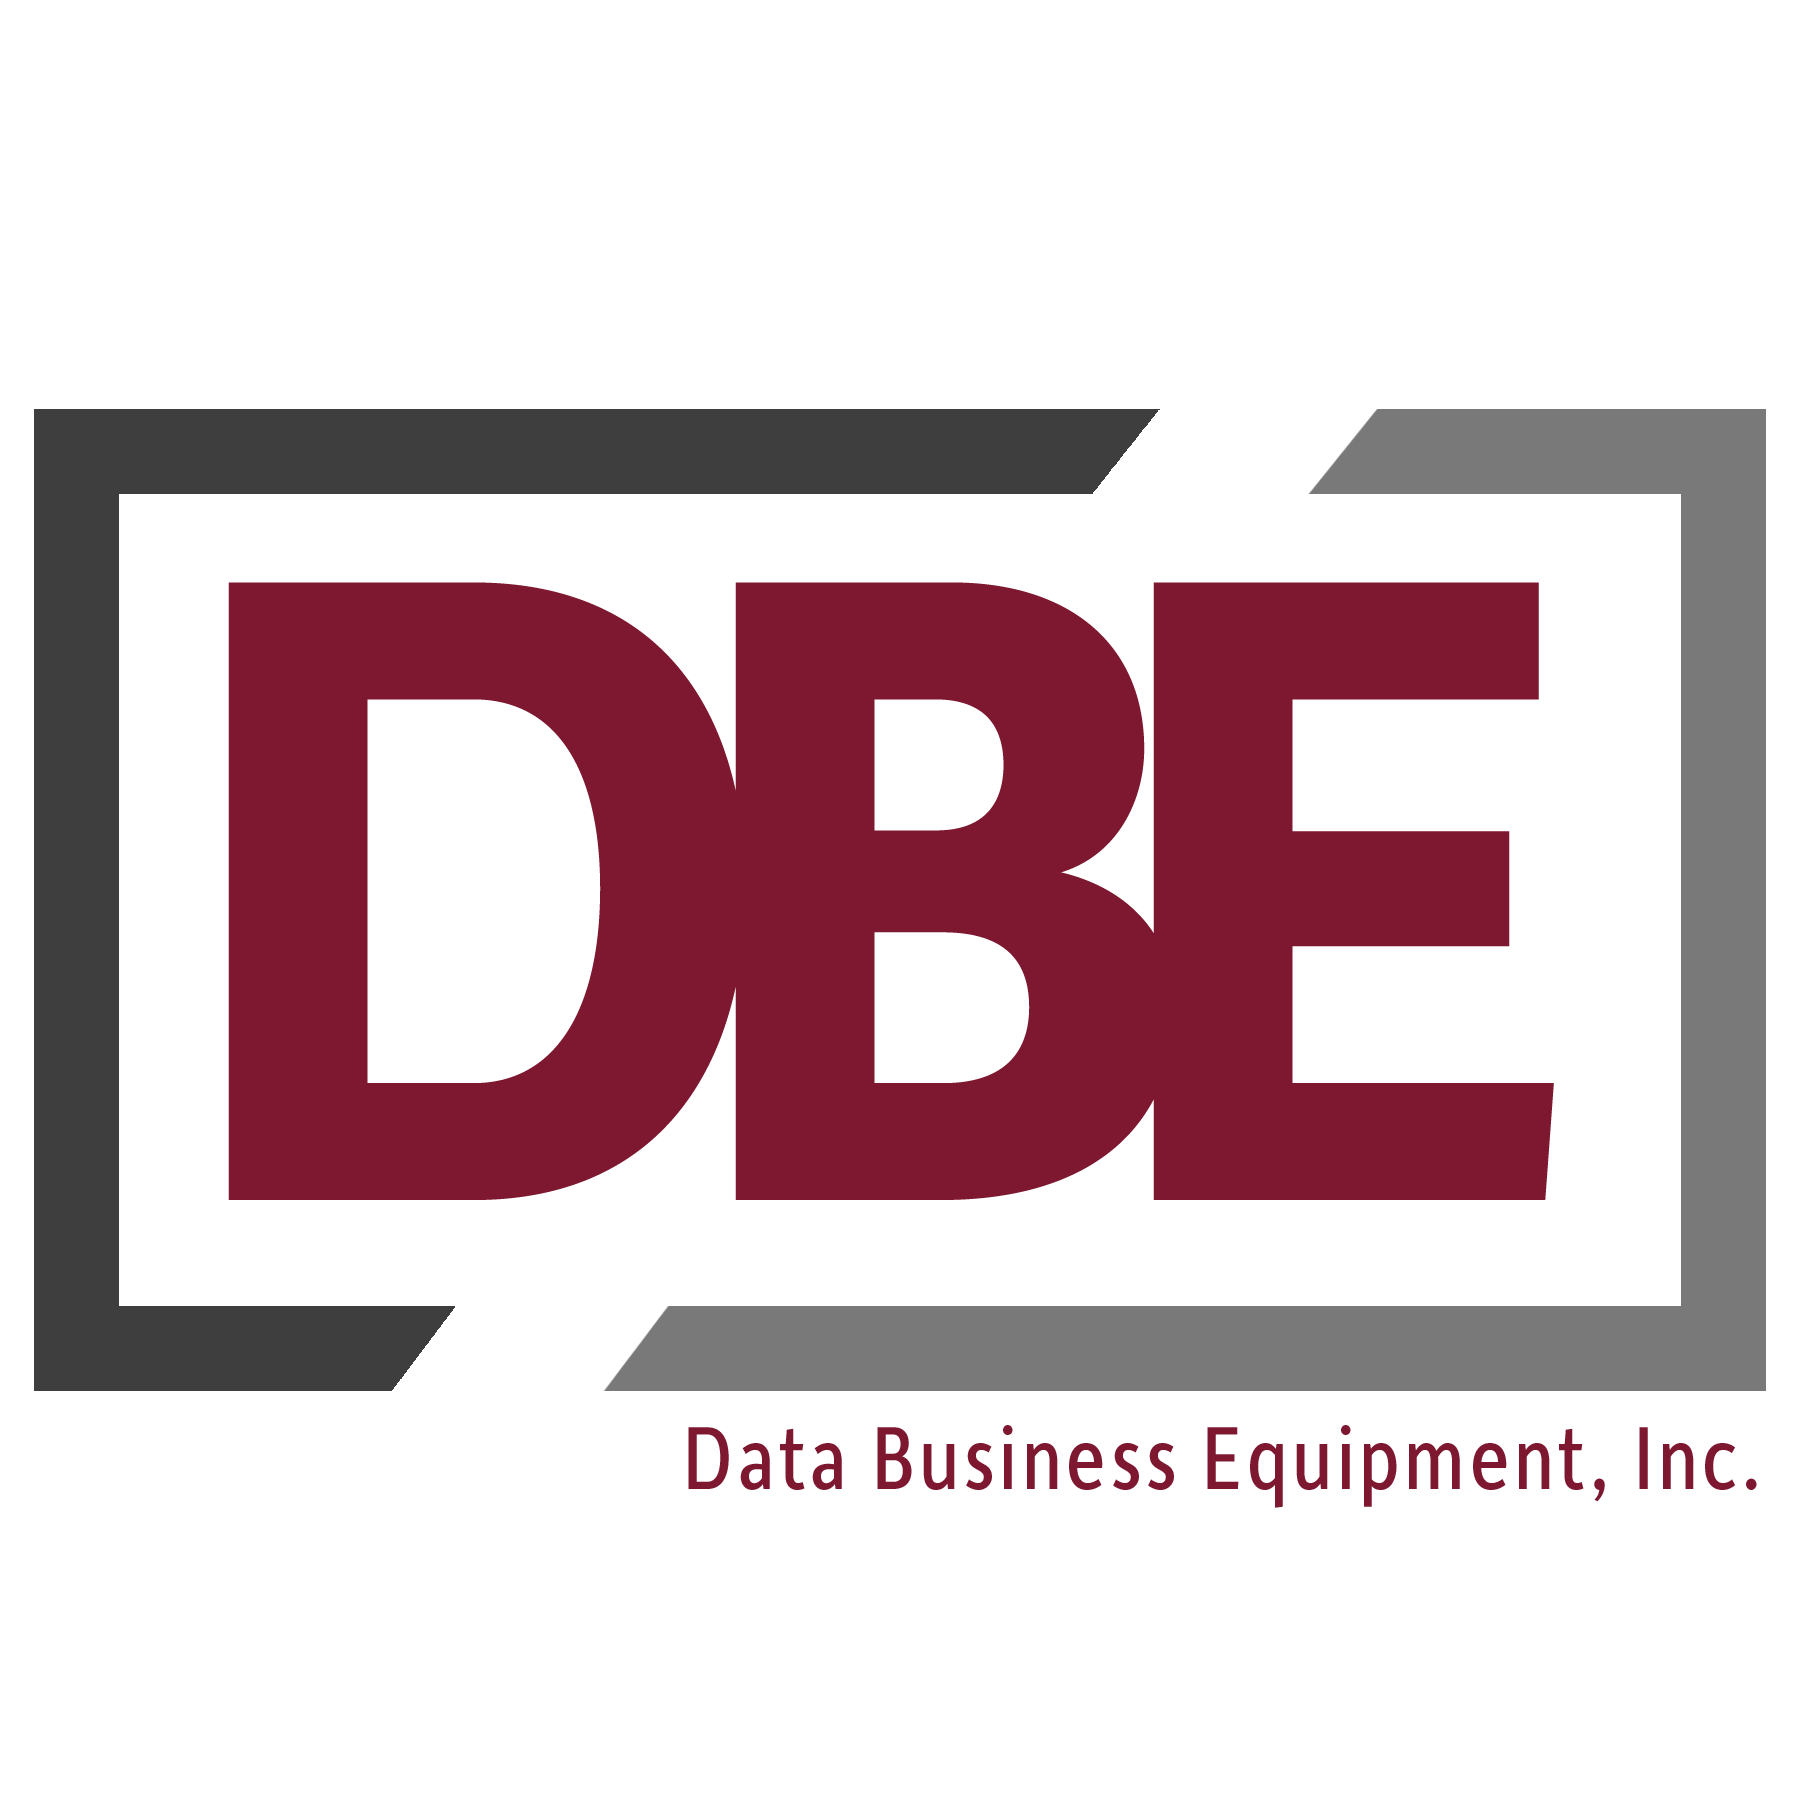 Data Business Equipment, Inc. logo